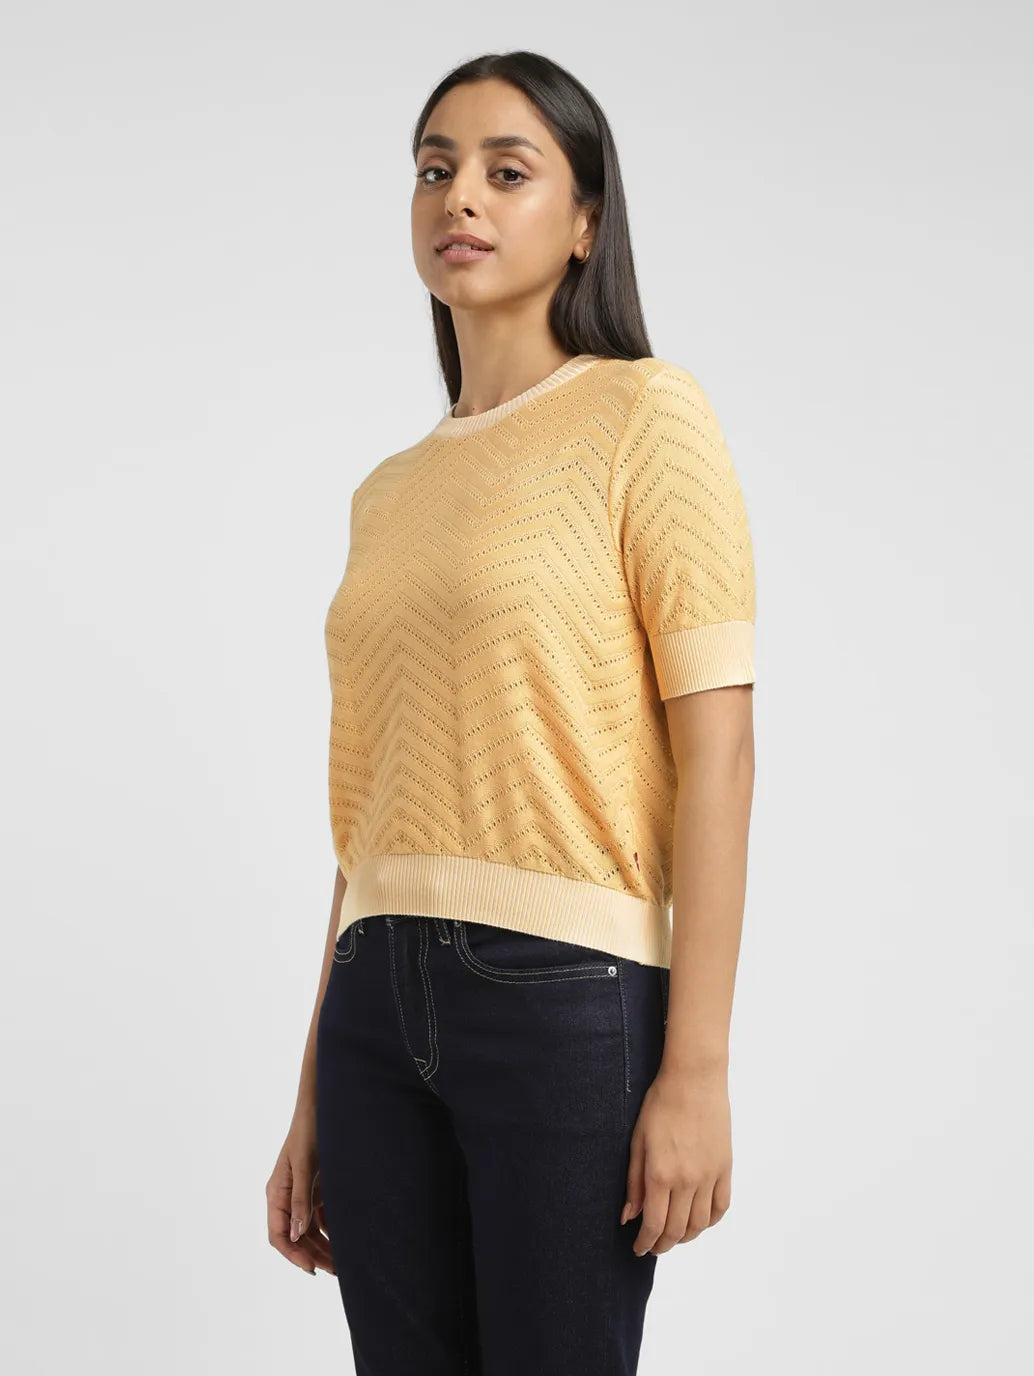 Women's Solid Yellow Crew Neck Sweater